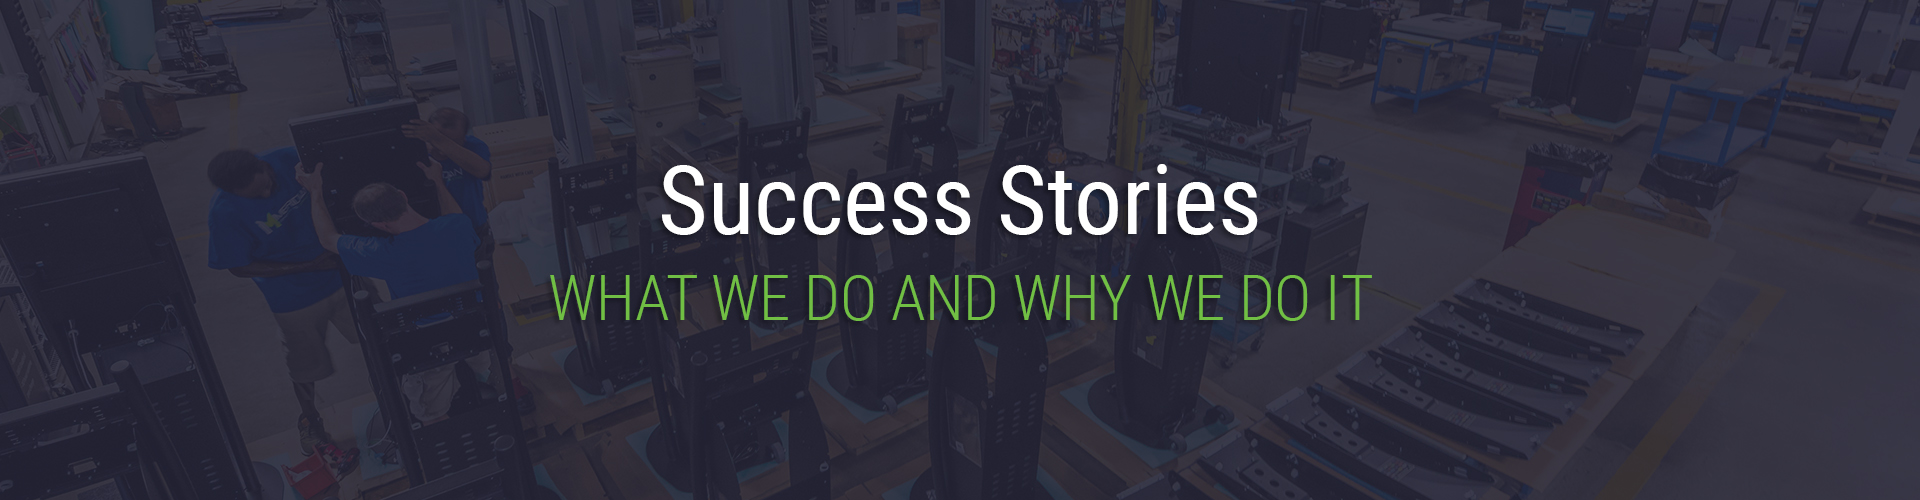 Success Stories Header